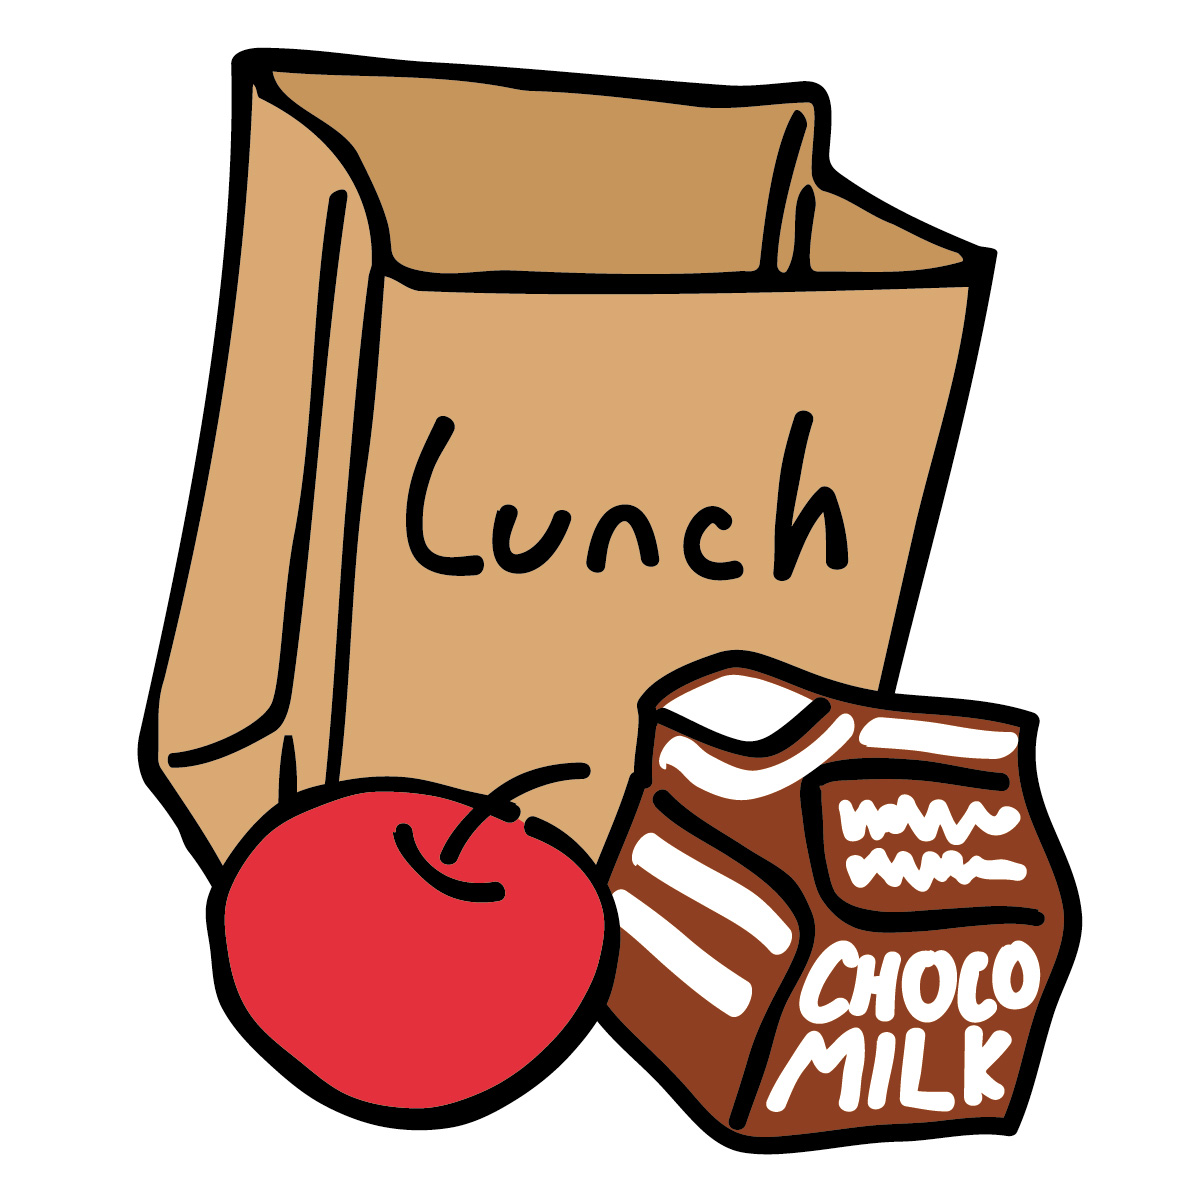 Lunch clip art at vector clip